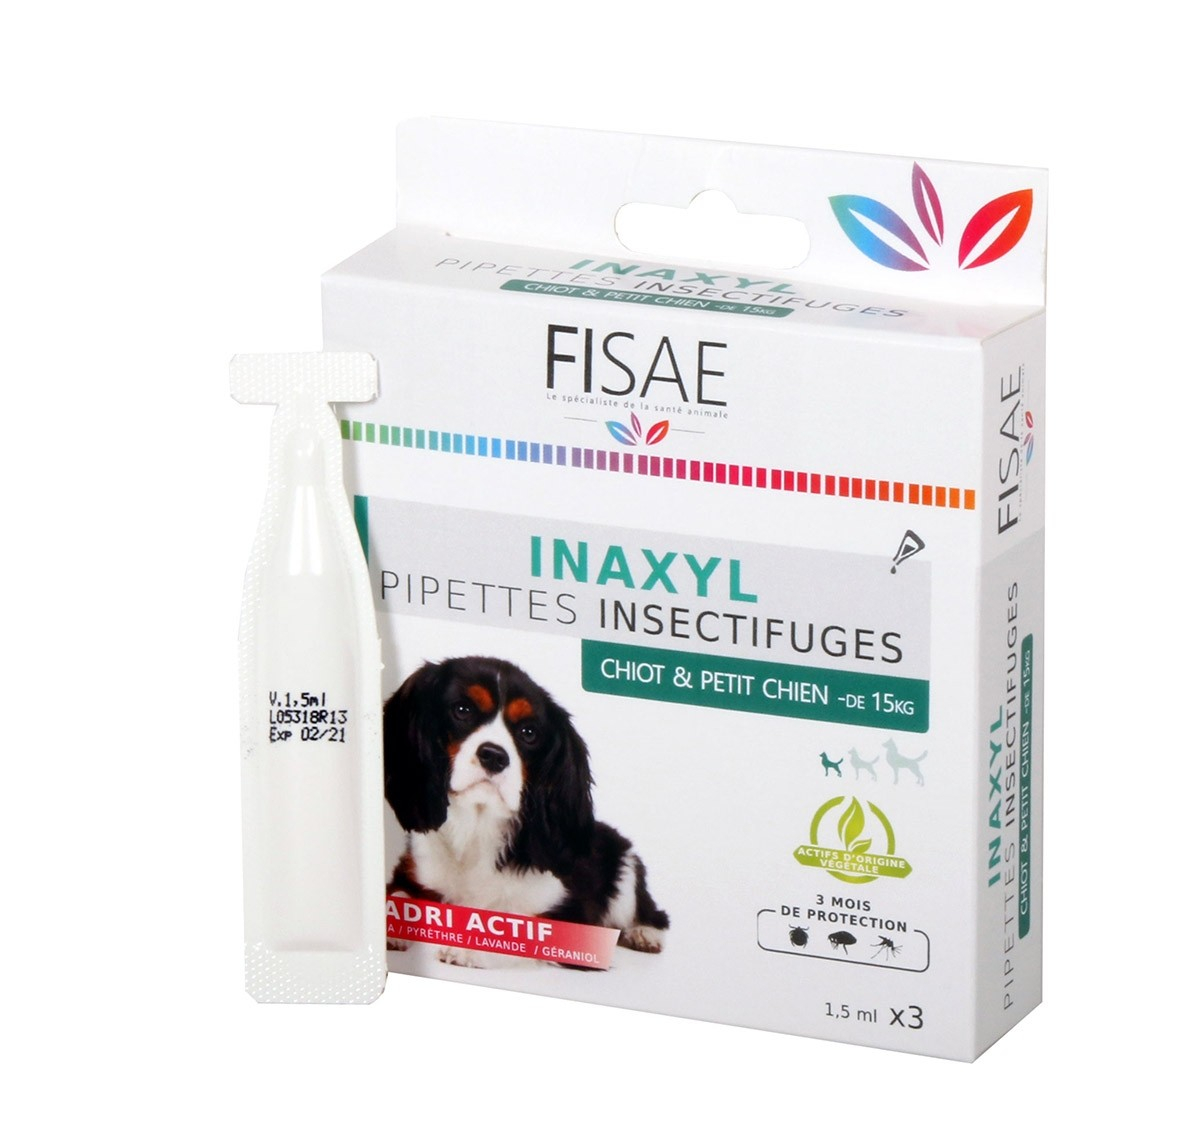 Insectenwerende pipetten FISAE INAXYL - Innoverend: 4 natuurlijke werkstoffen